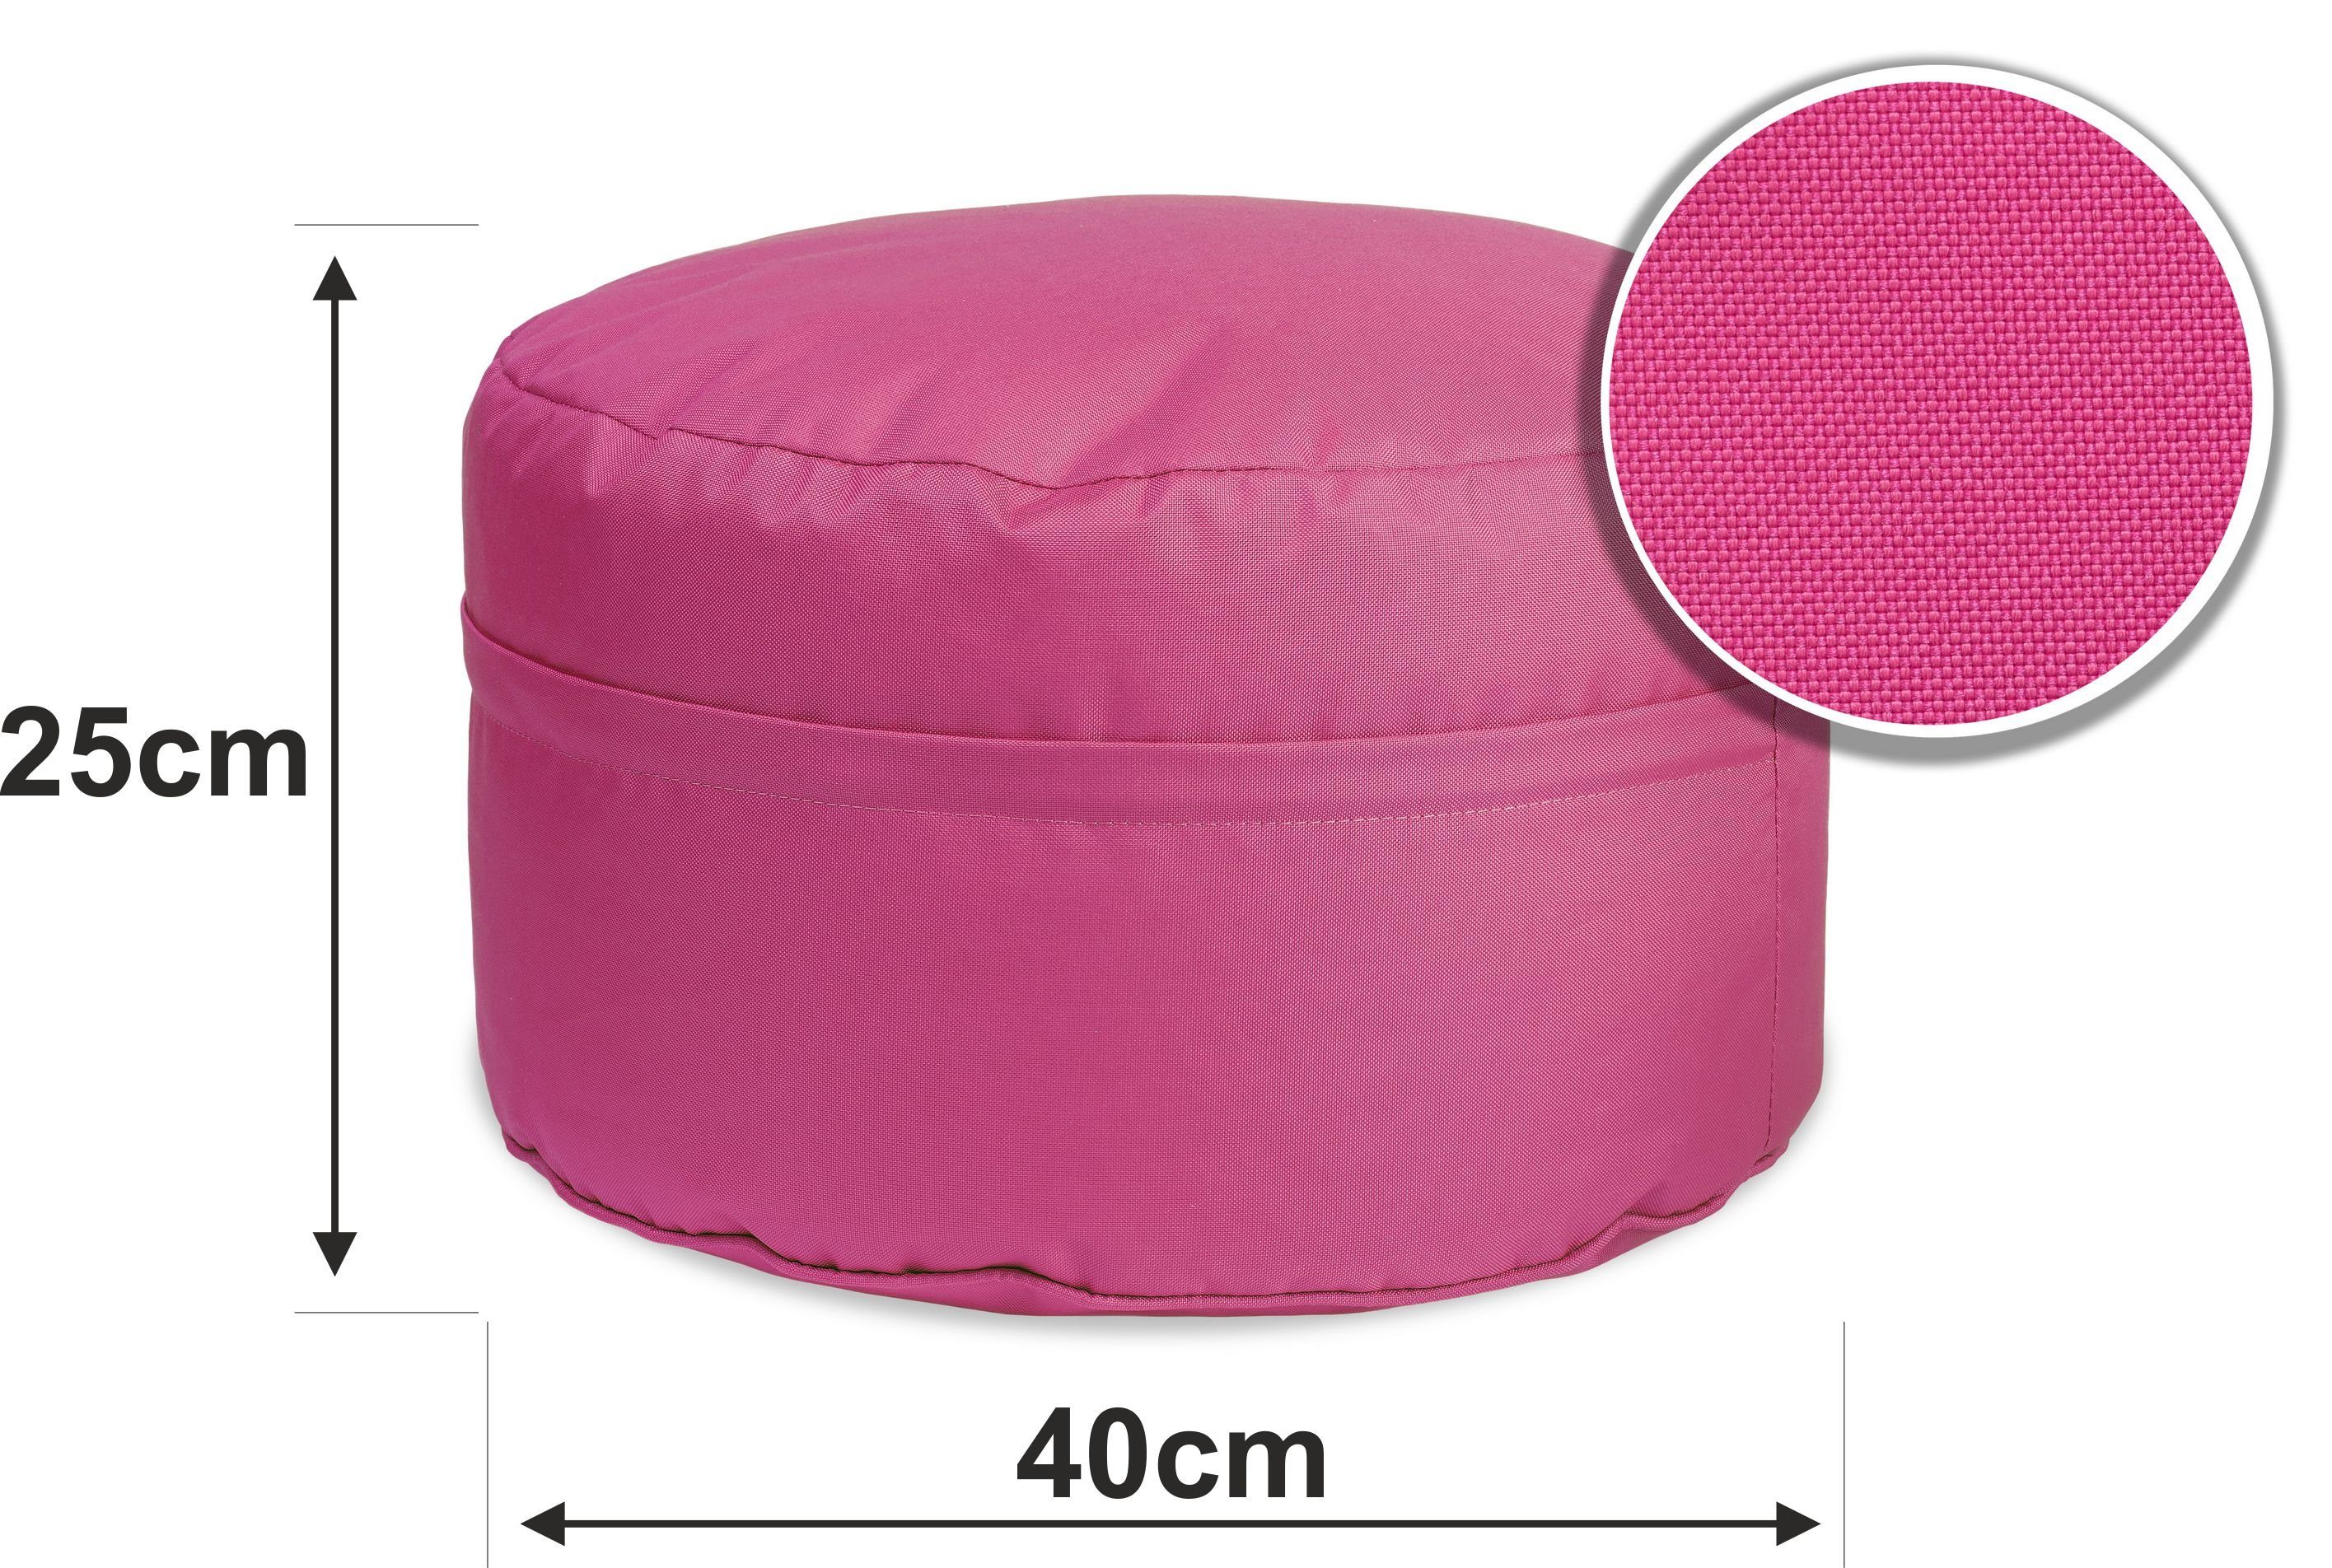 x mit - 25 45 Hocker rund rosa Bezug, abnehmbarem Sitzpouf Runder Sitzsack sunnypillow cm Sitzsack